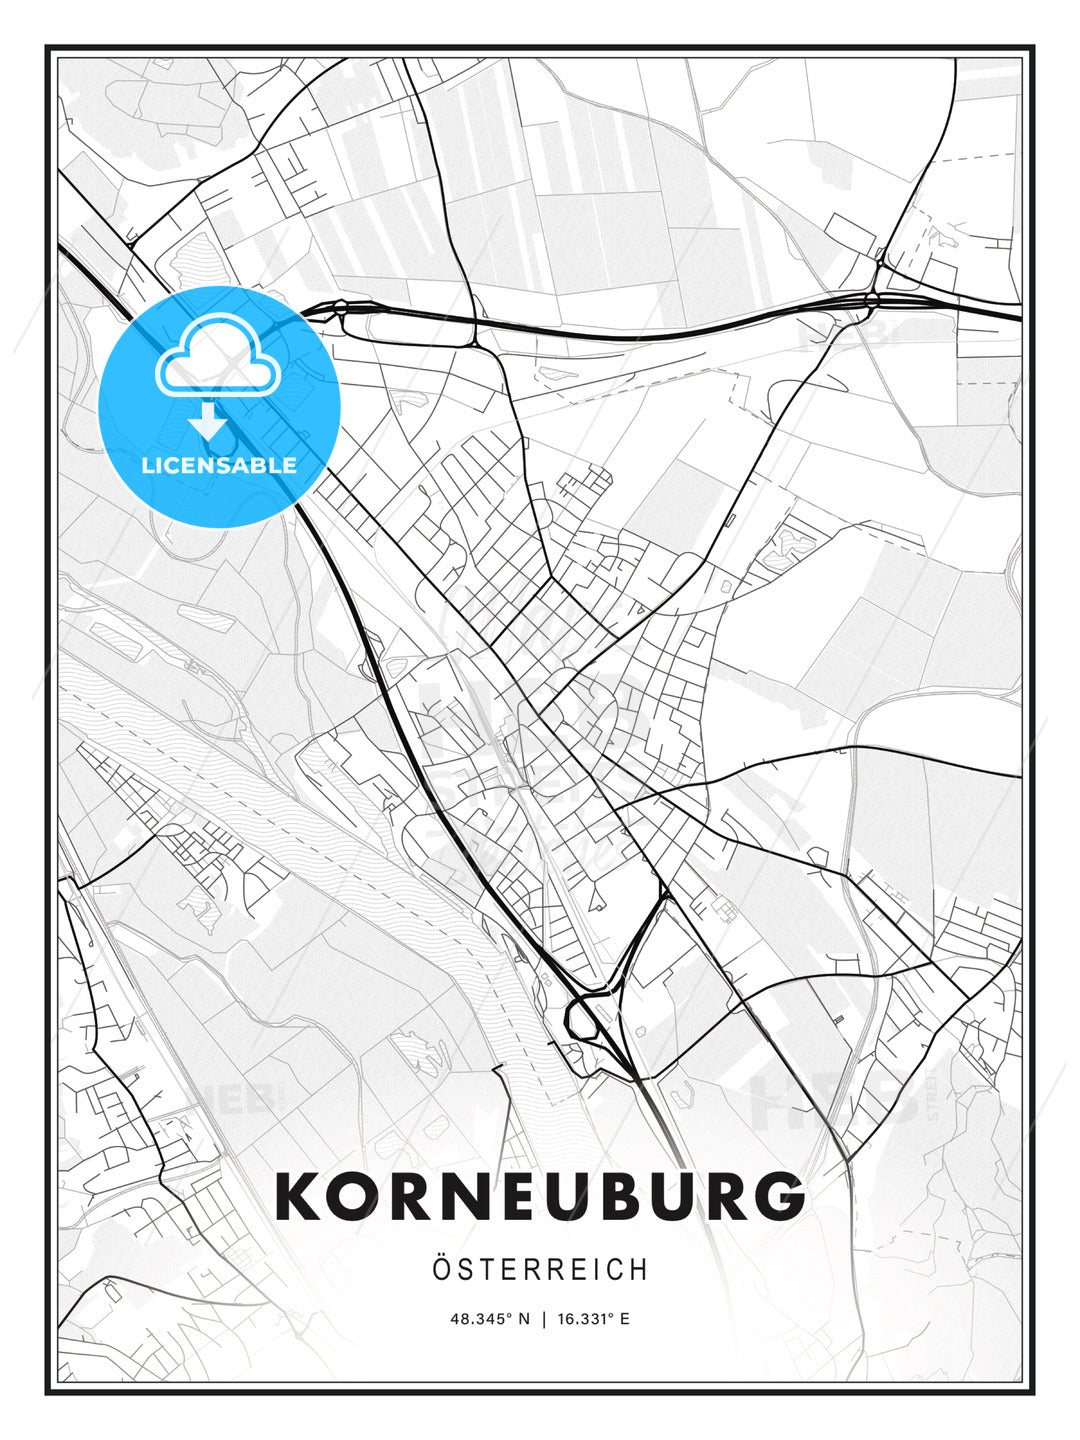 Korneuburg, Austria, Modern Print Template in Various Formats - HEBSTREITS Sketches